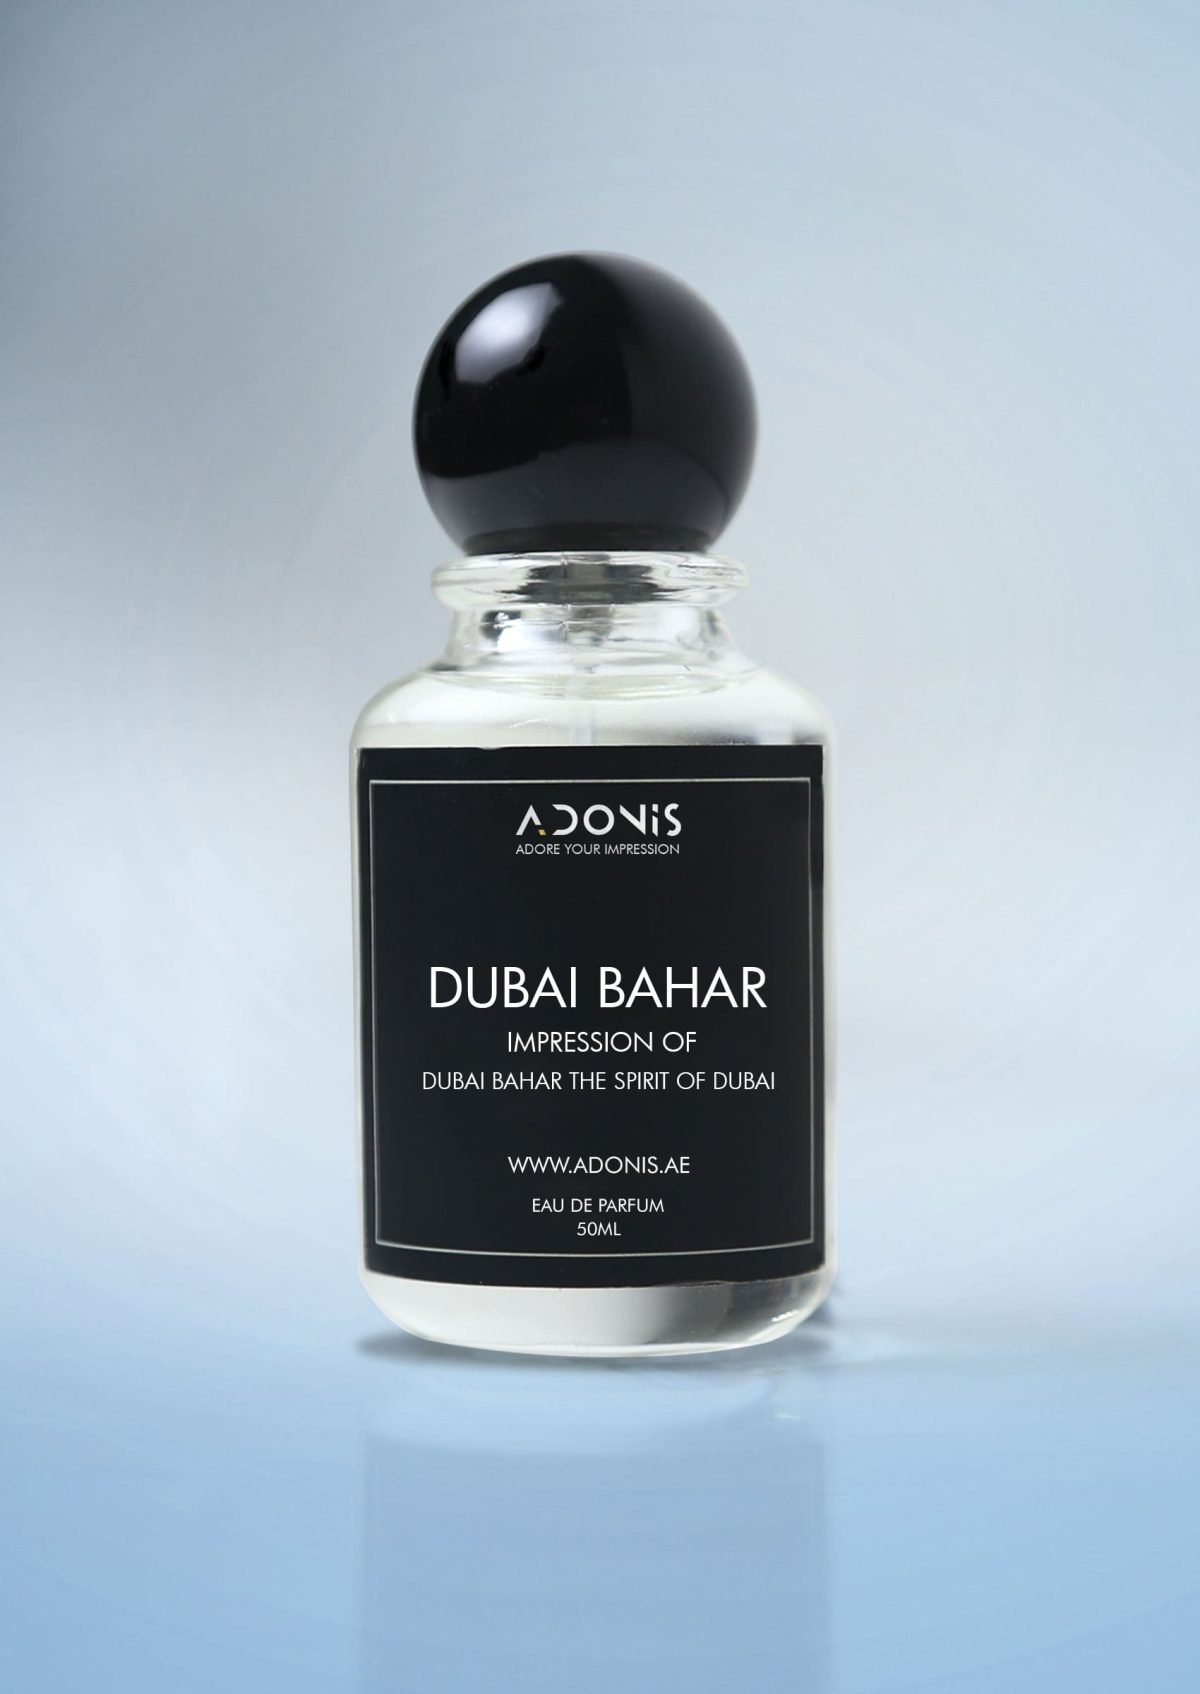 Dubai Bahar